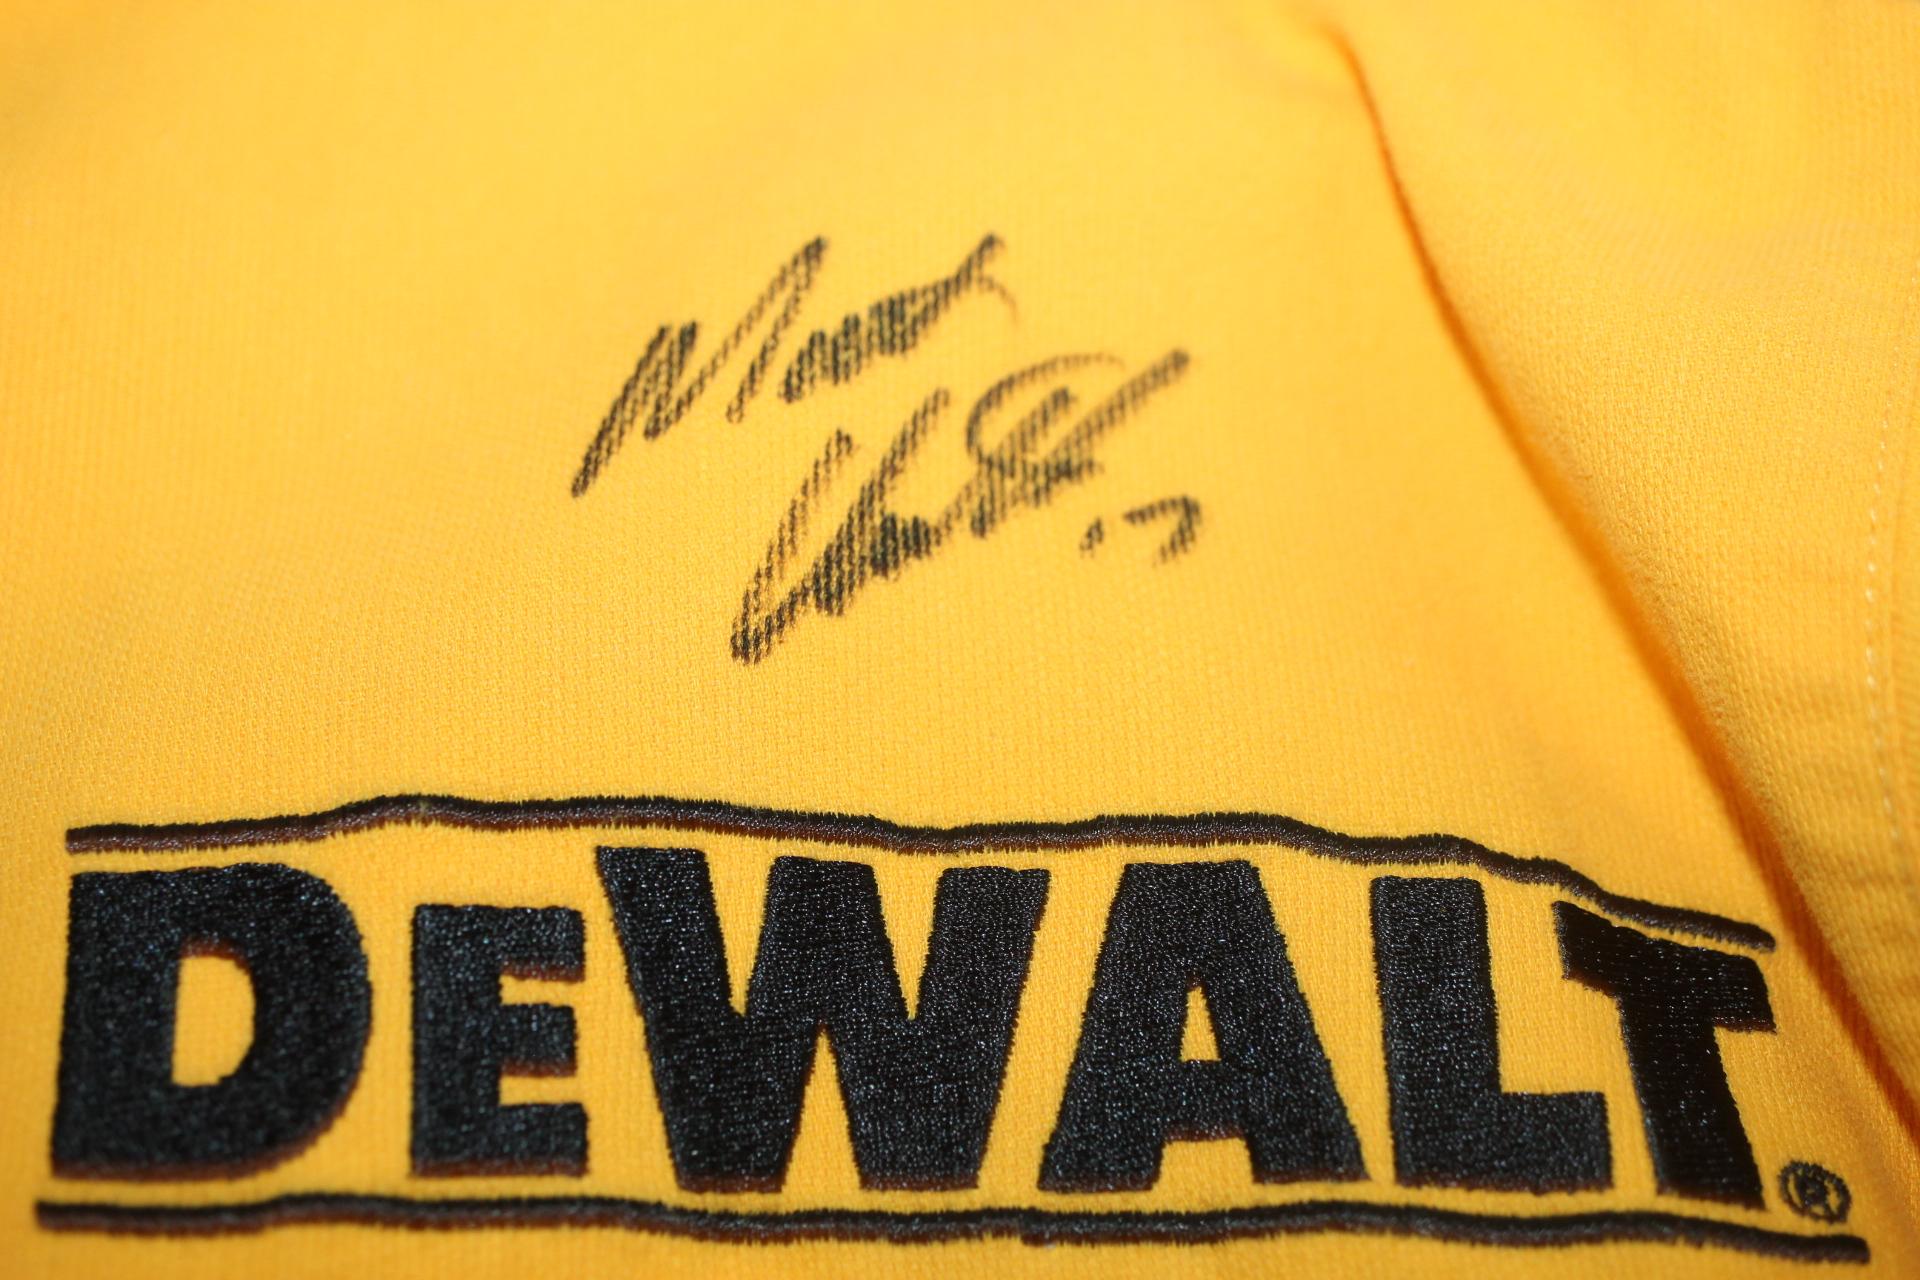 Matt Kenseth Signed DeWalt Jersey, No COA, Chase Authentics Drivers Line, Size XL